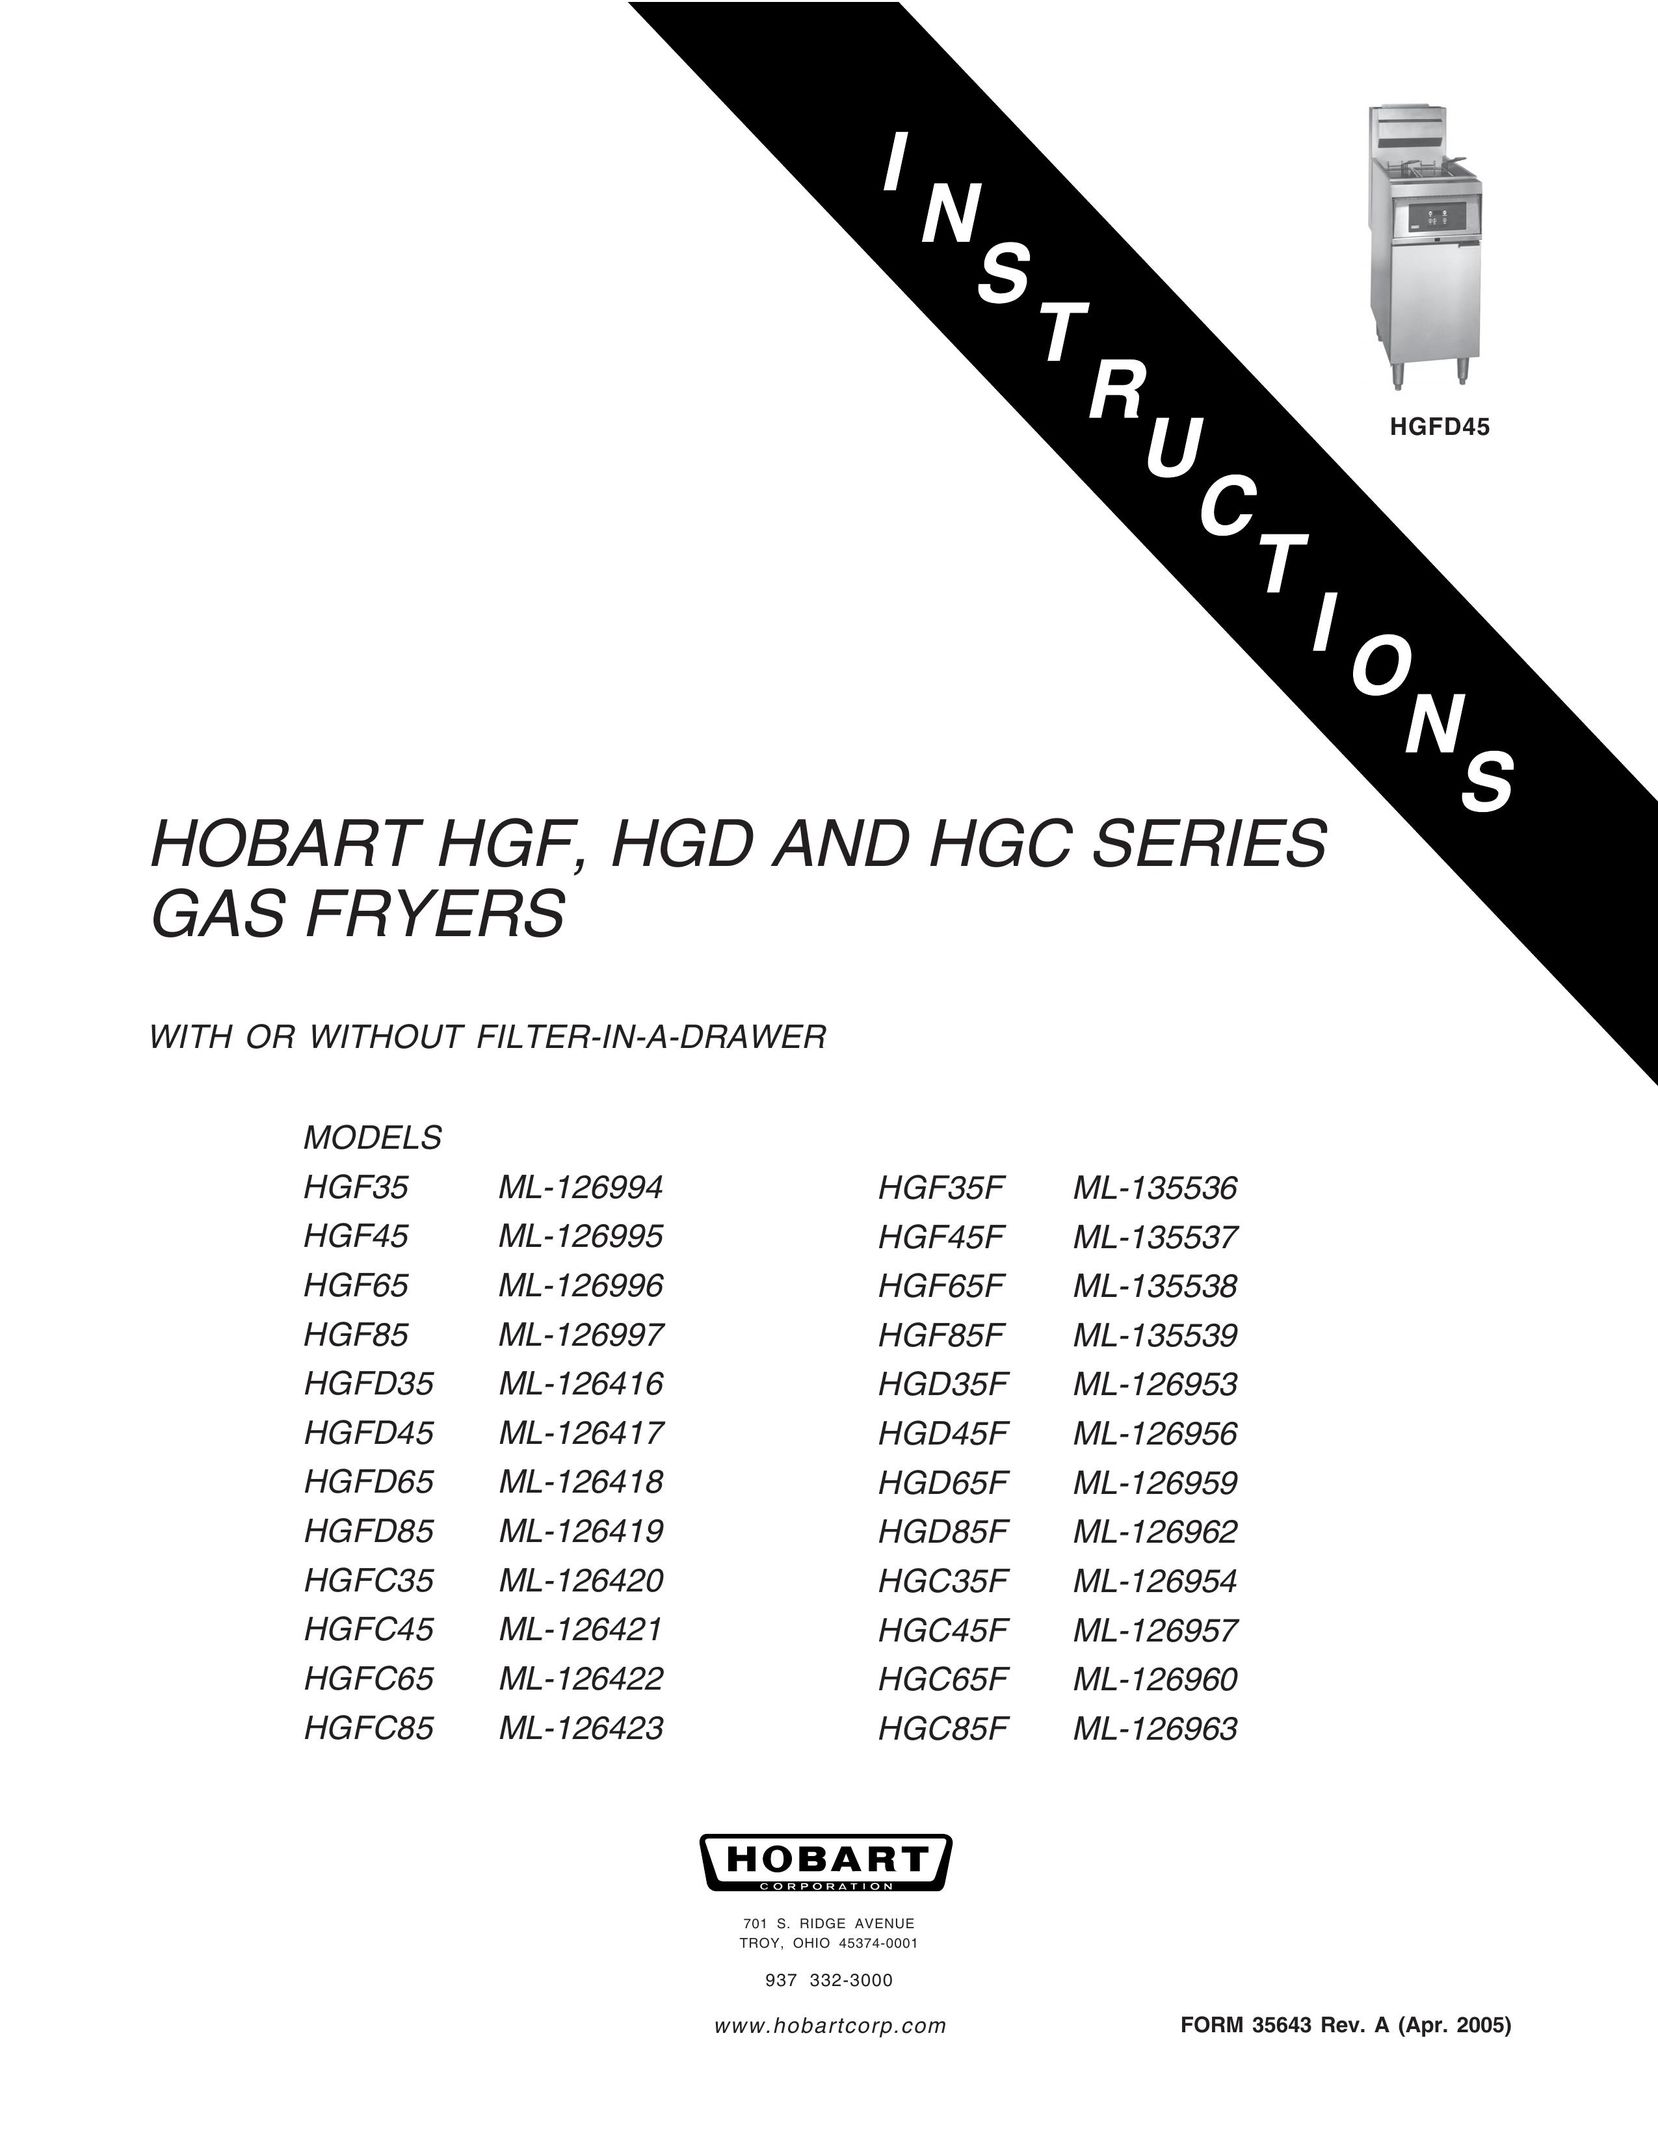 Hobart HGC65F ML-126960 Fryer User Manual